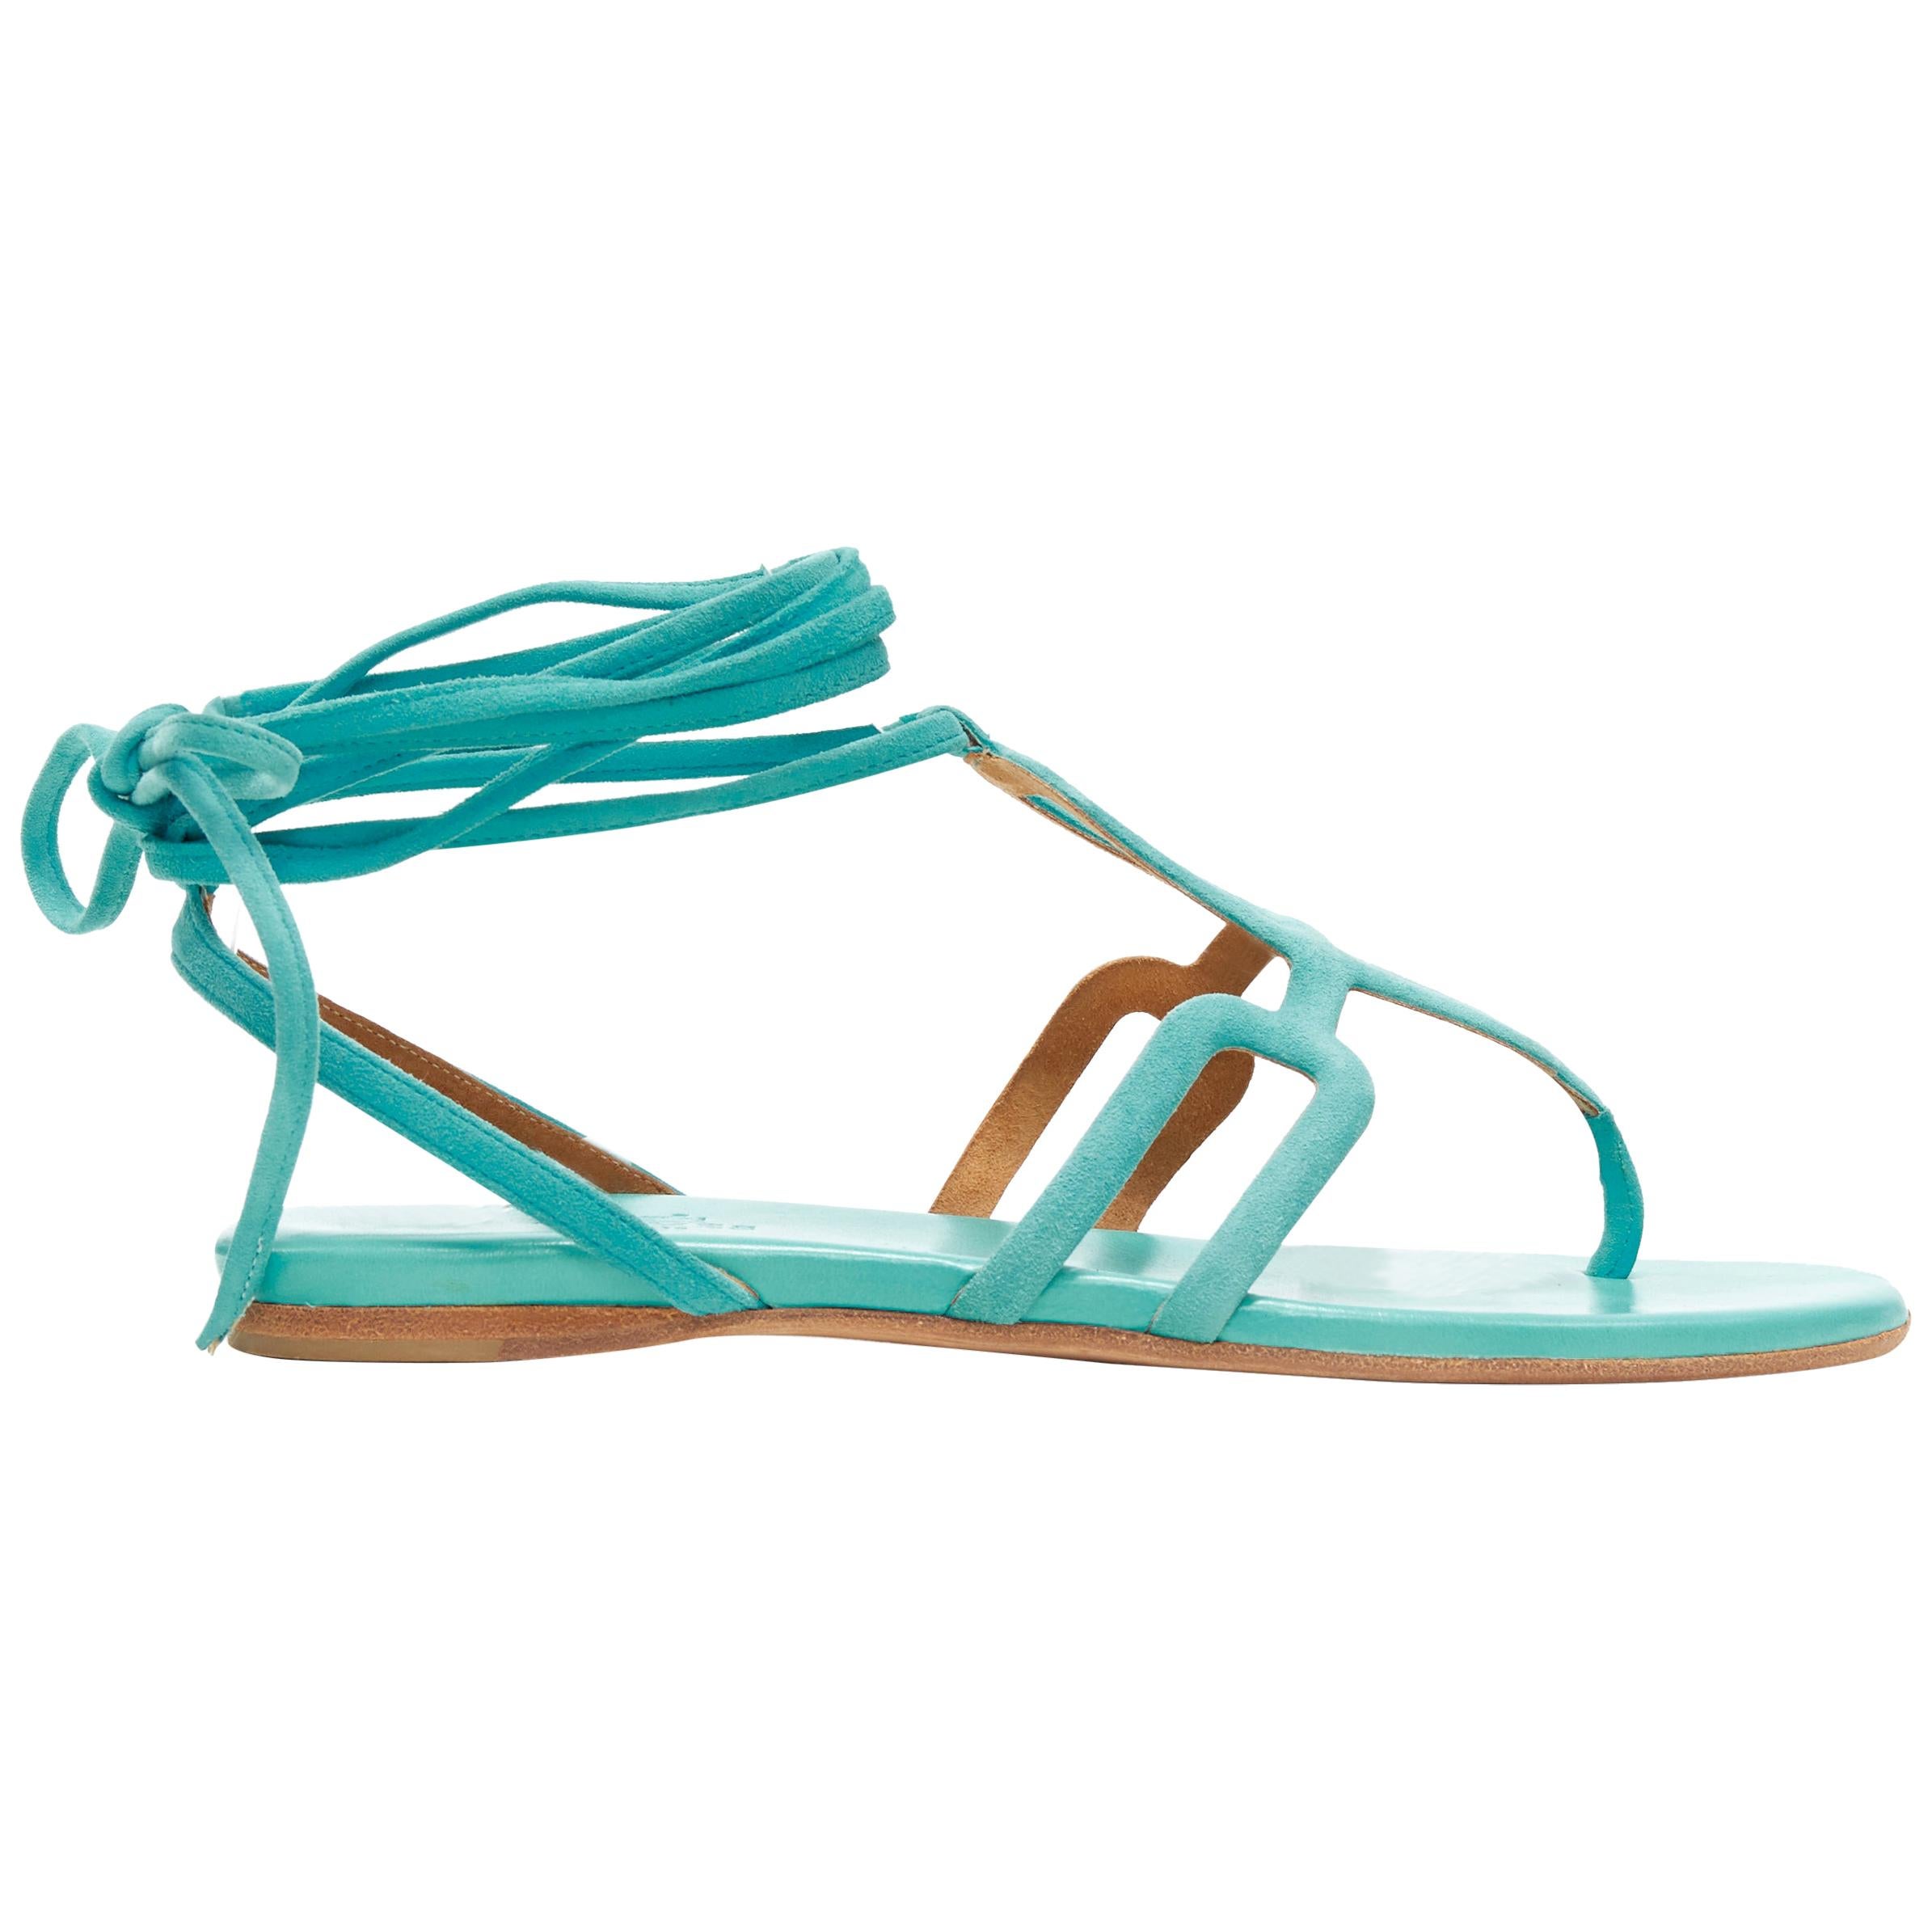 HERMES teal blue suede geometric buckle ankle wrap thong flat sandals EU35.5